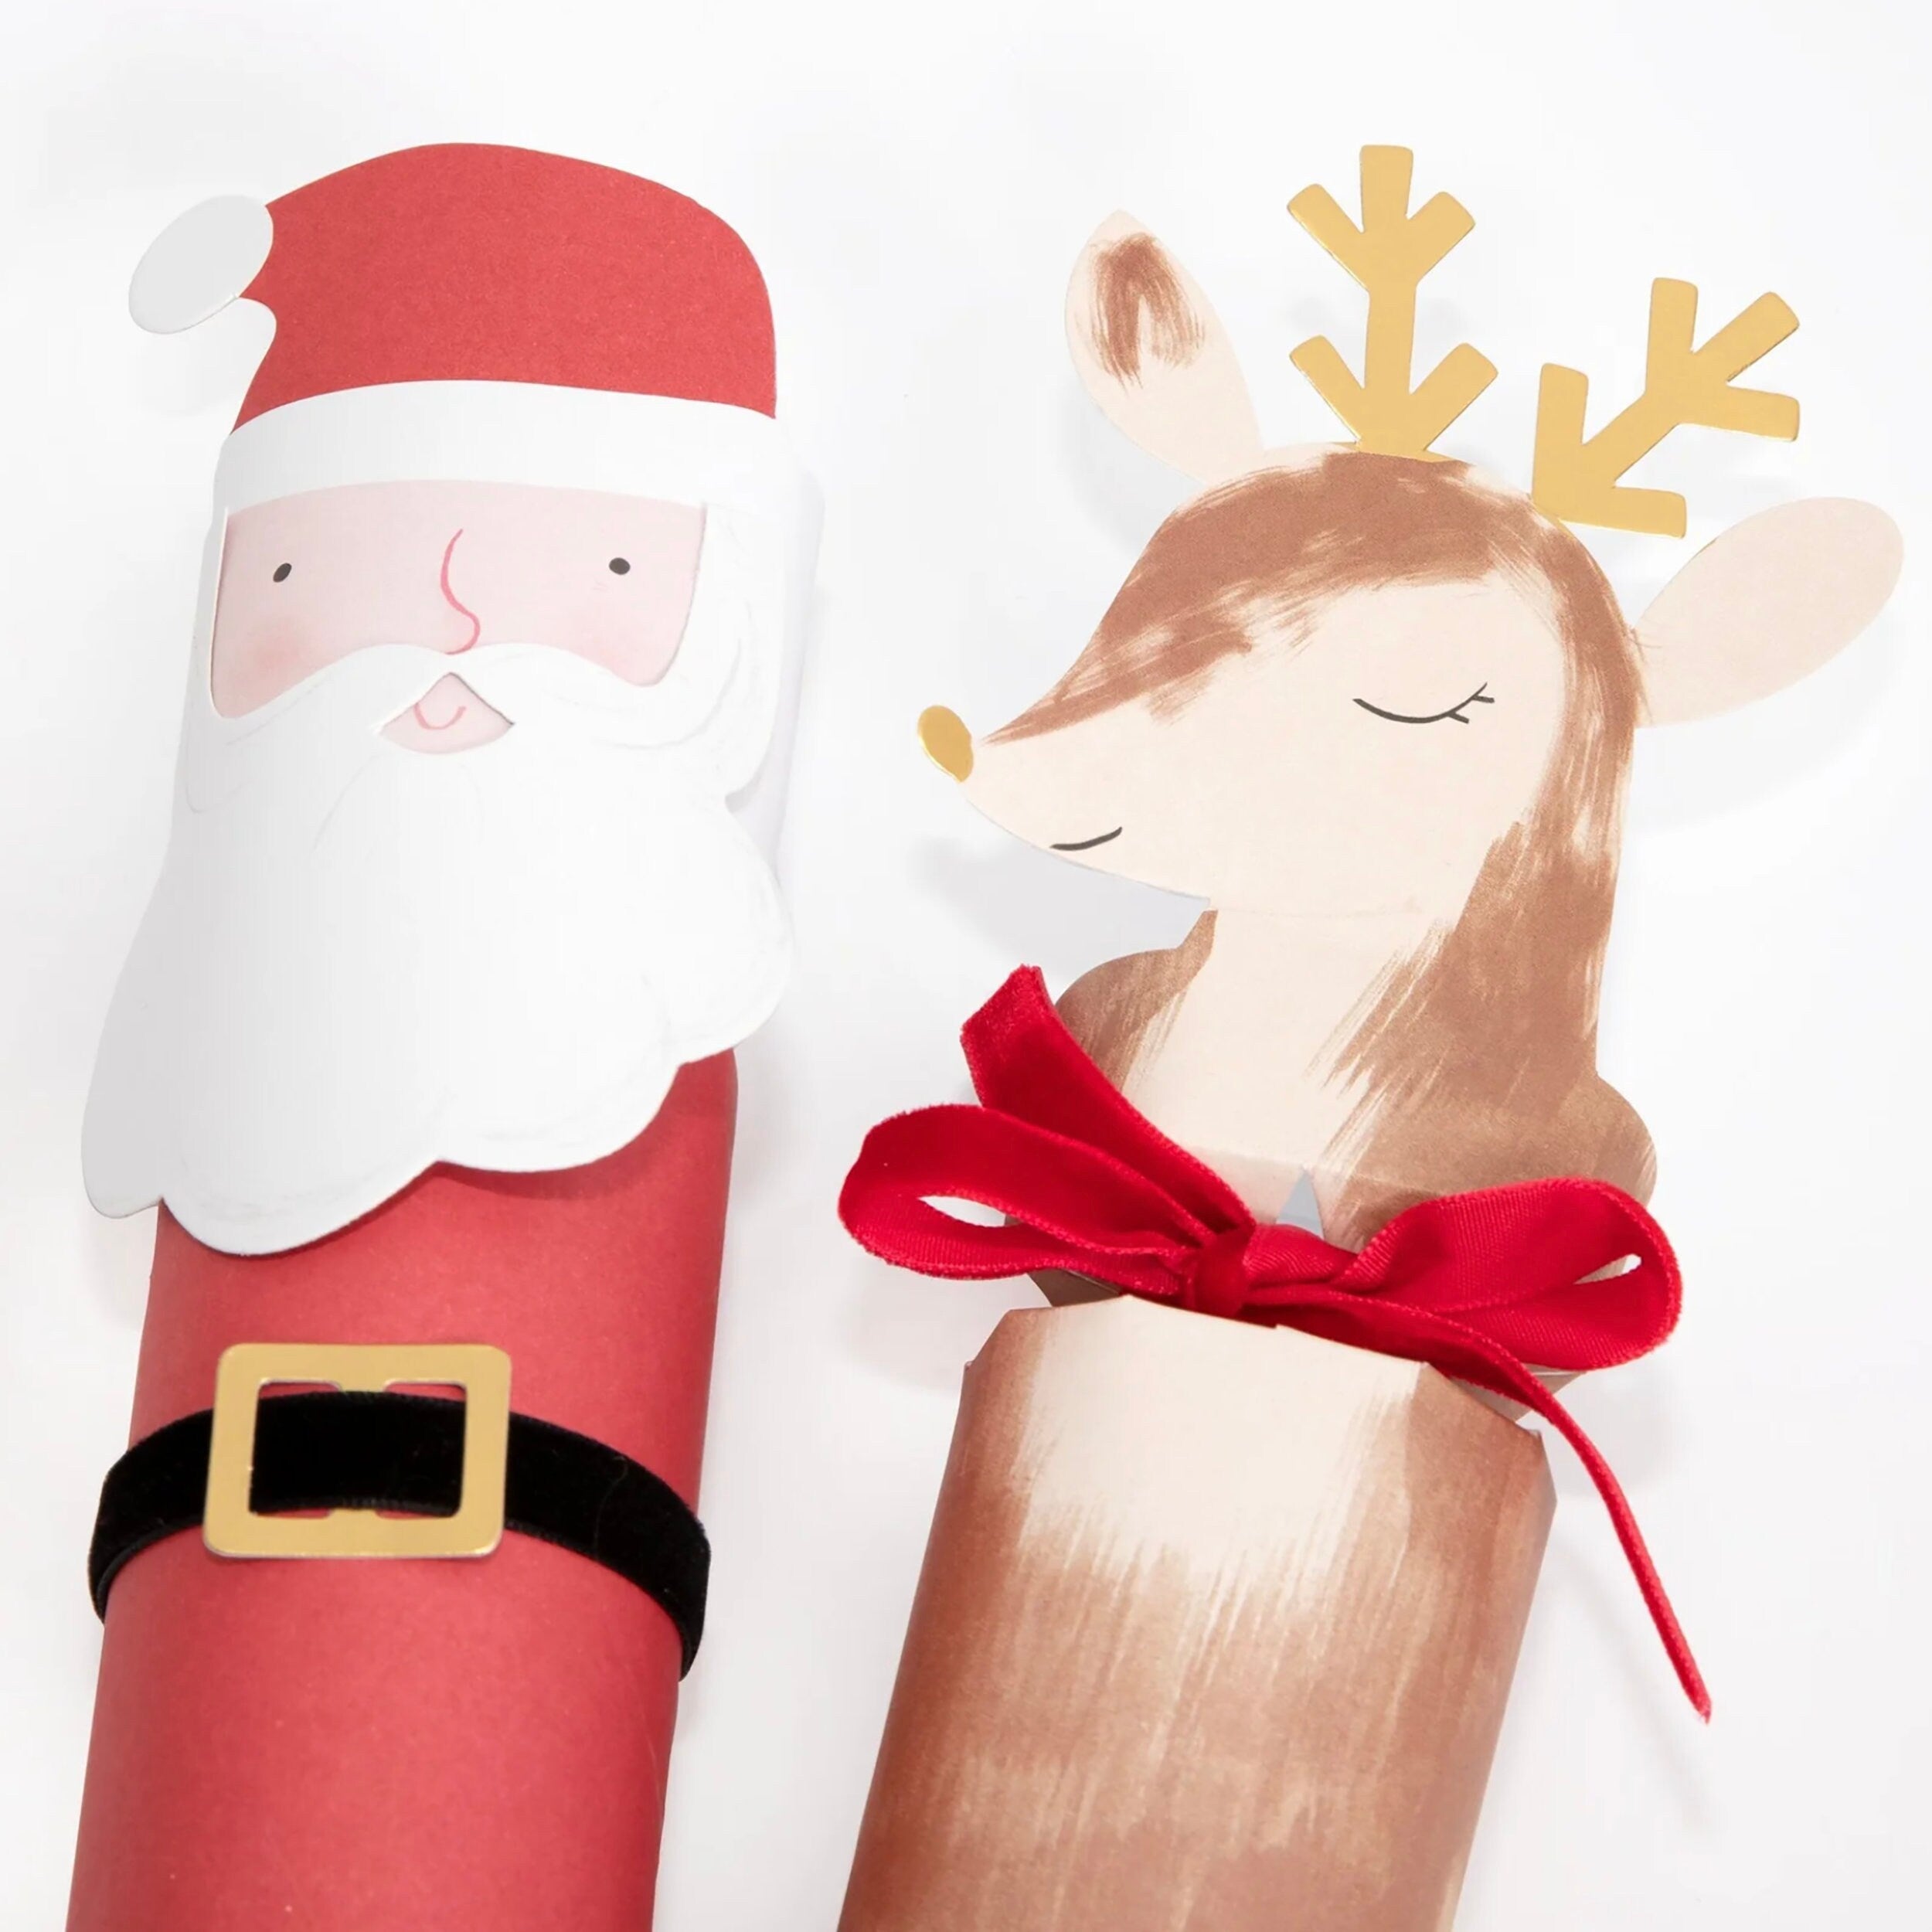 Luxury Christmas Crackers | British Christmas Cracker - Holiday Crackers - English Christmas Cracker - Party Cracker - Luxury Xmas Crackers